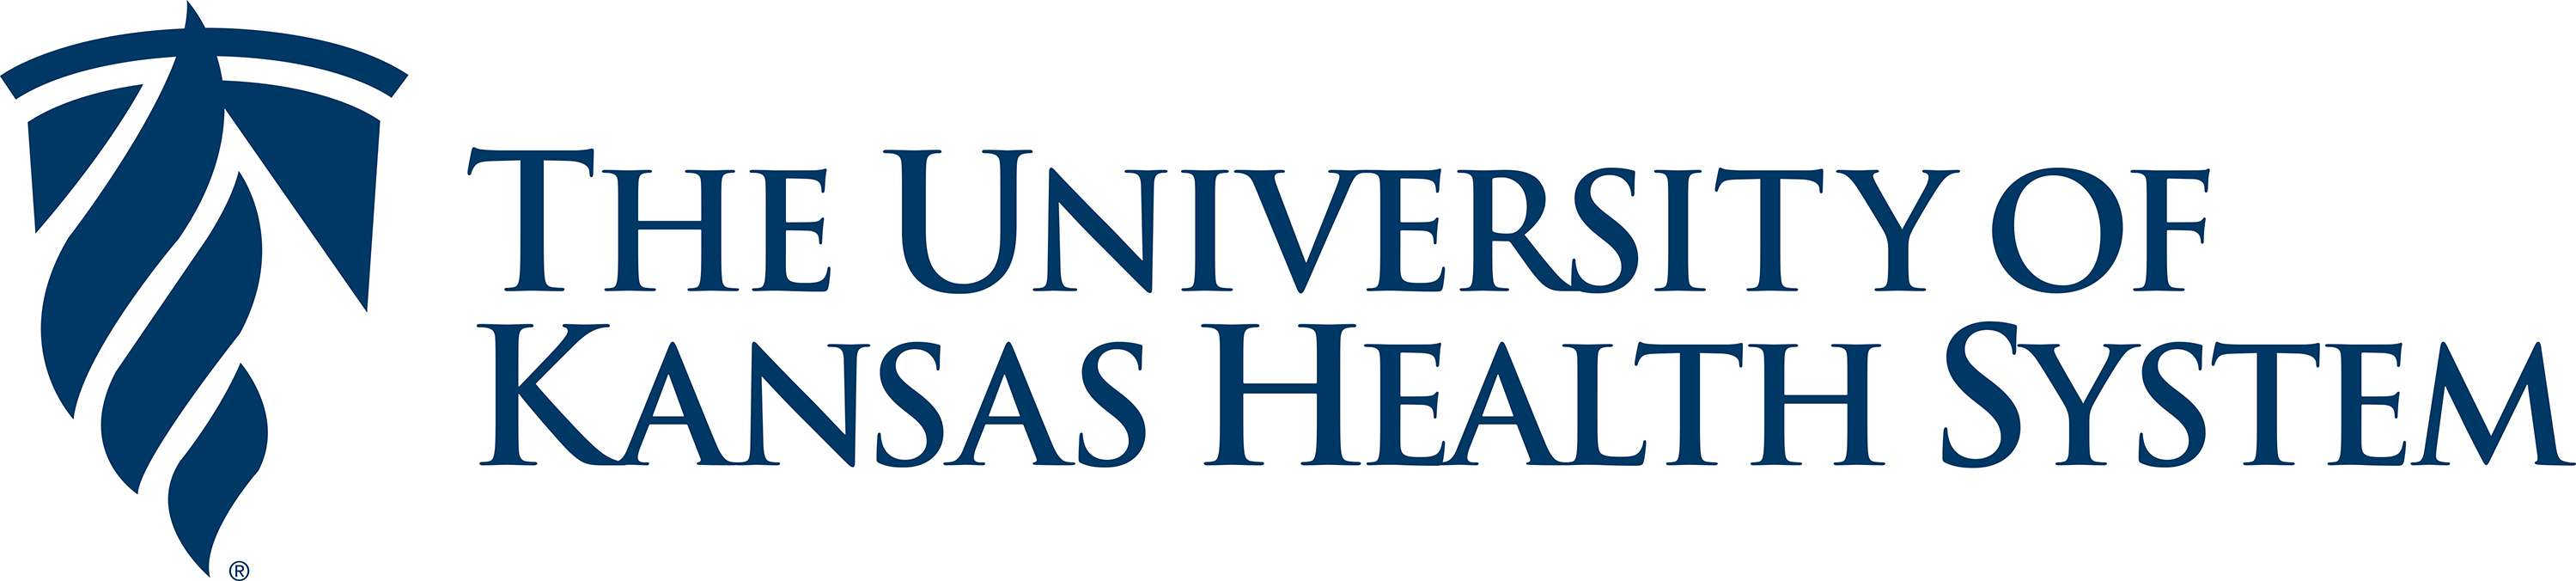 University of Kansas Health System